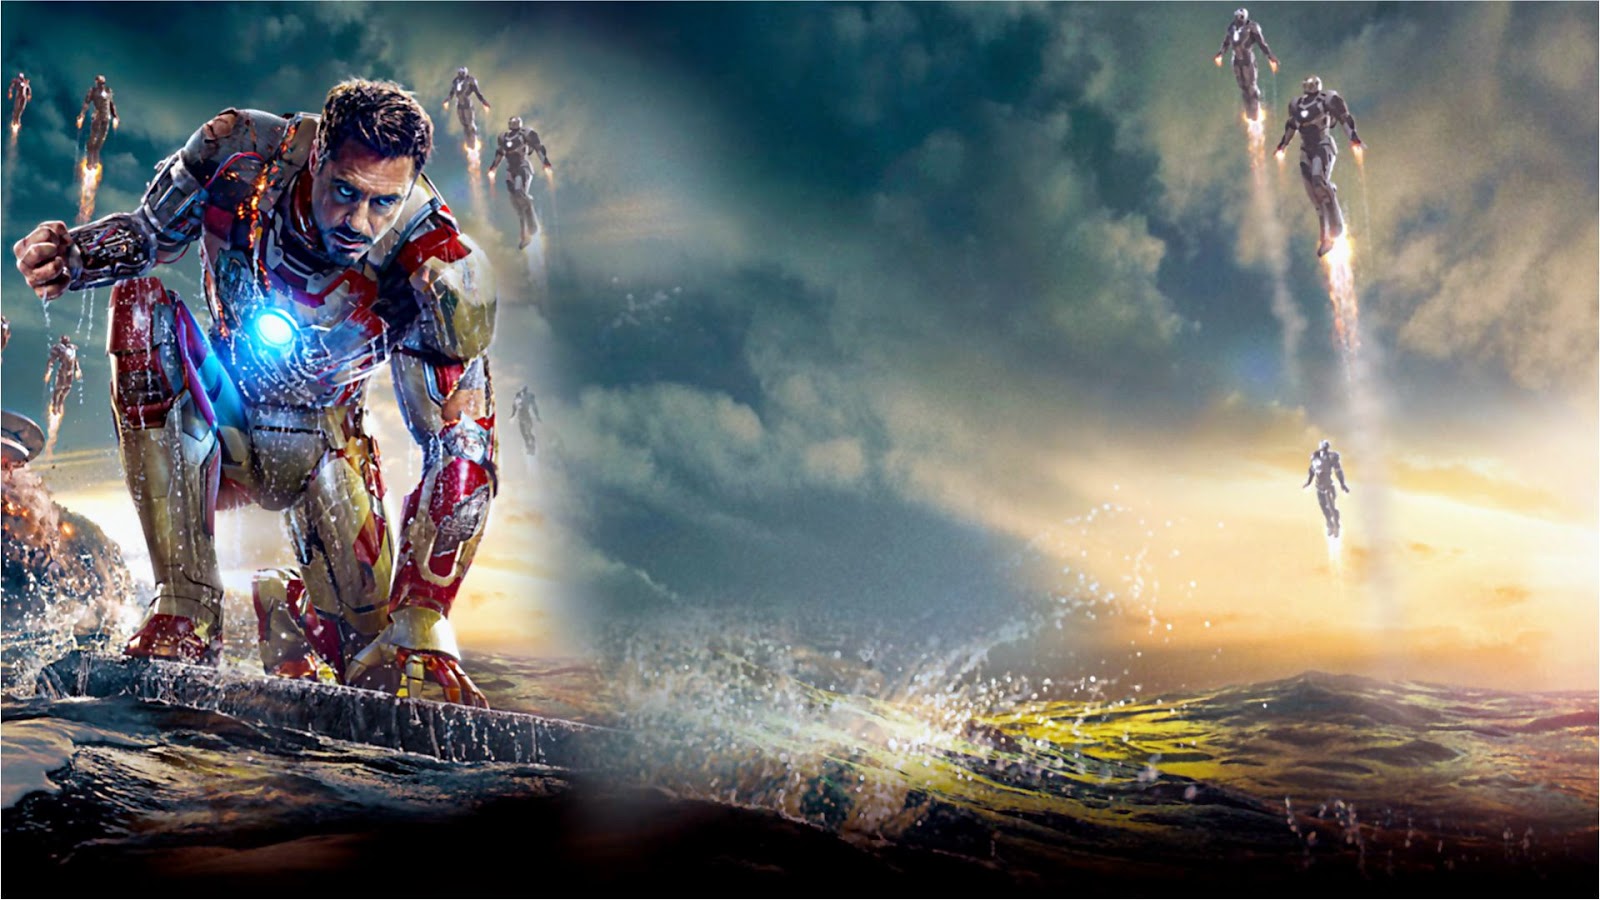 WALLPAPER ANDROID - IPHONE: Wallpaper Iron Man 3 HD